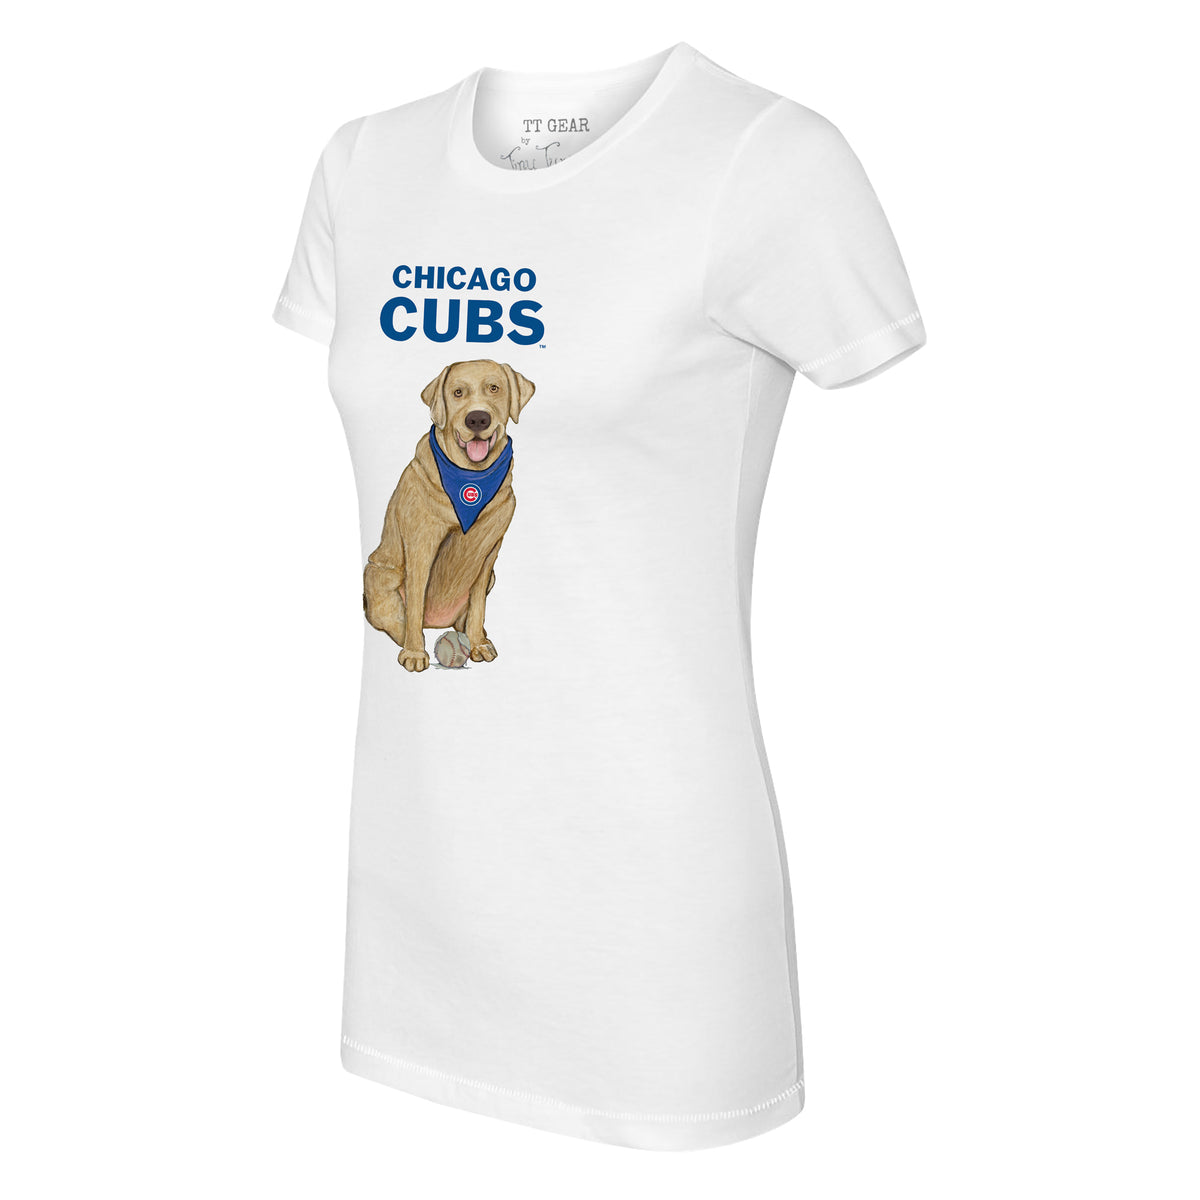 Chicago Cubs Yellow Labrador Retriever Tee Shirt